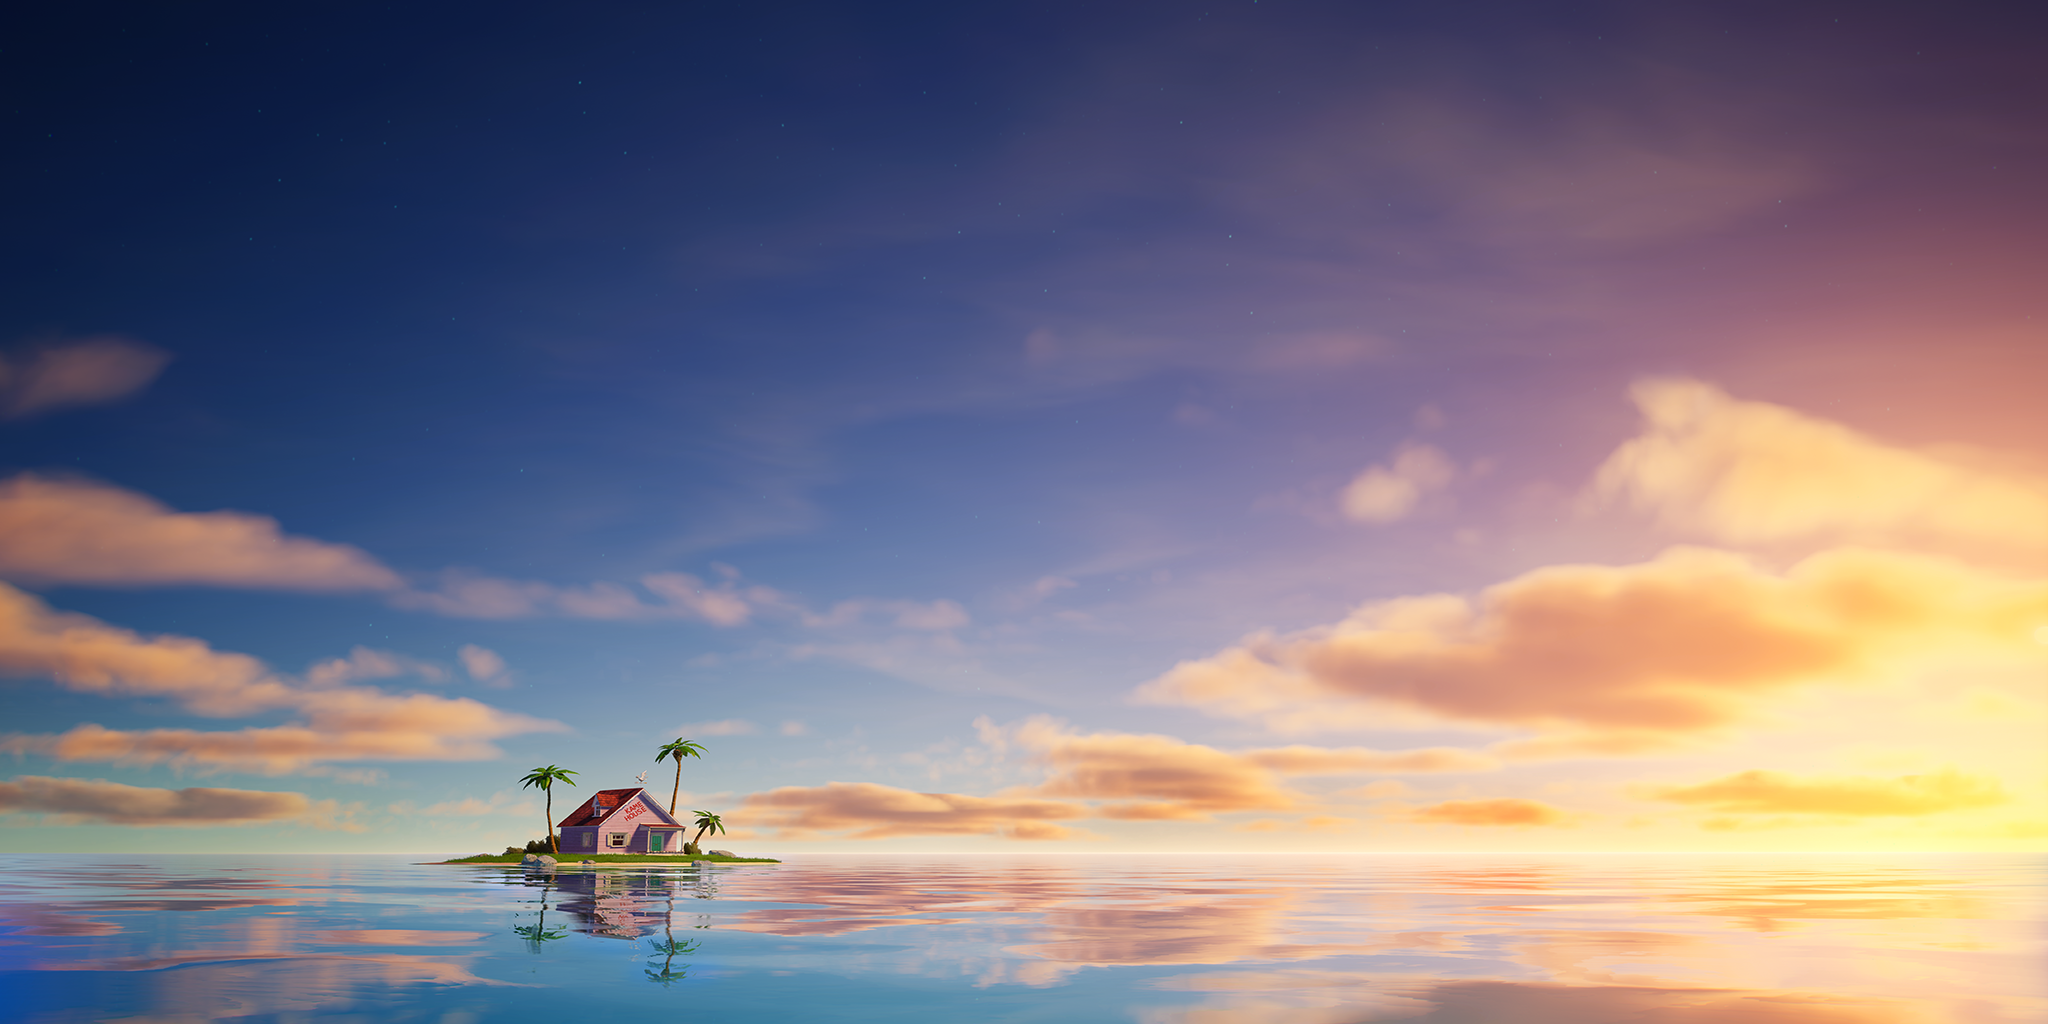 Anime 2048x1024 Dragon Ball reflection water clouds sky island house